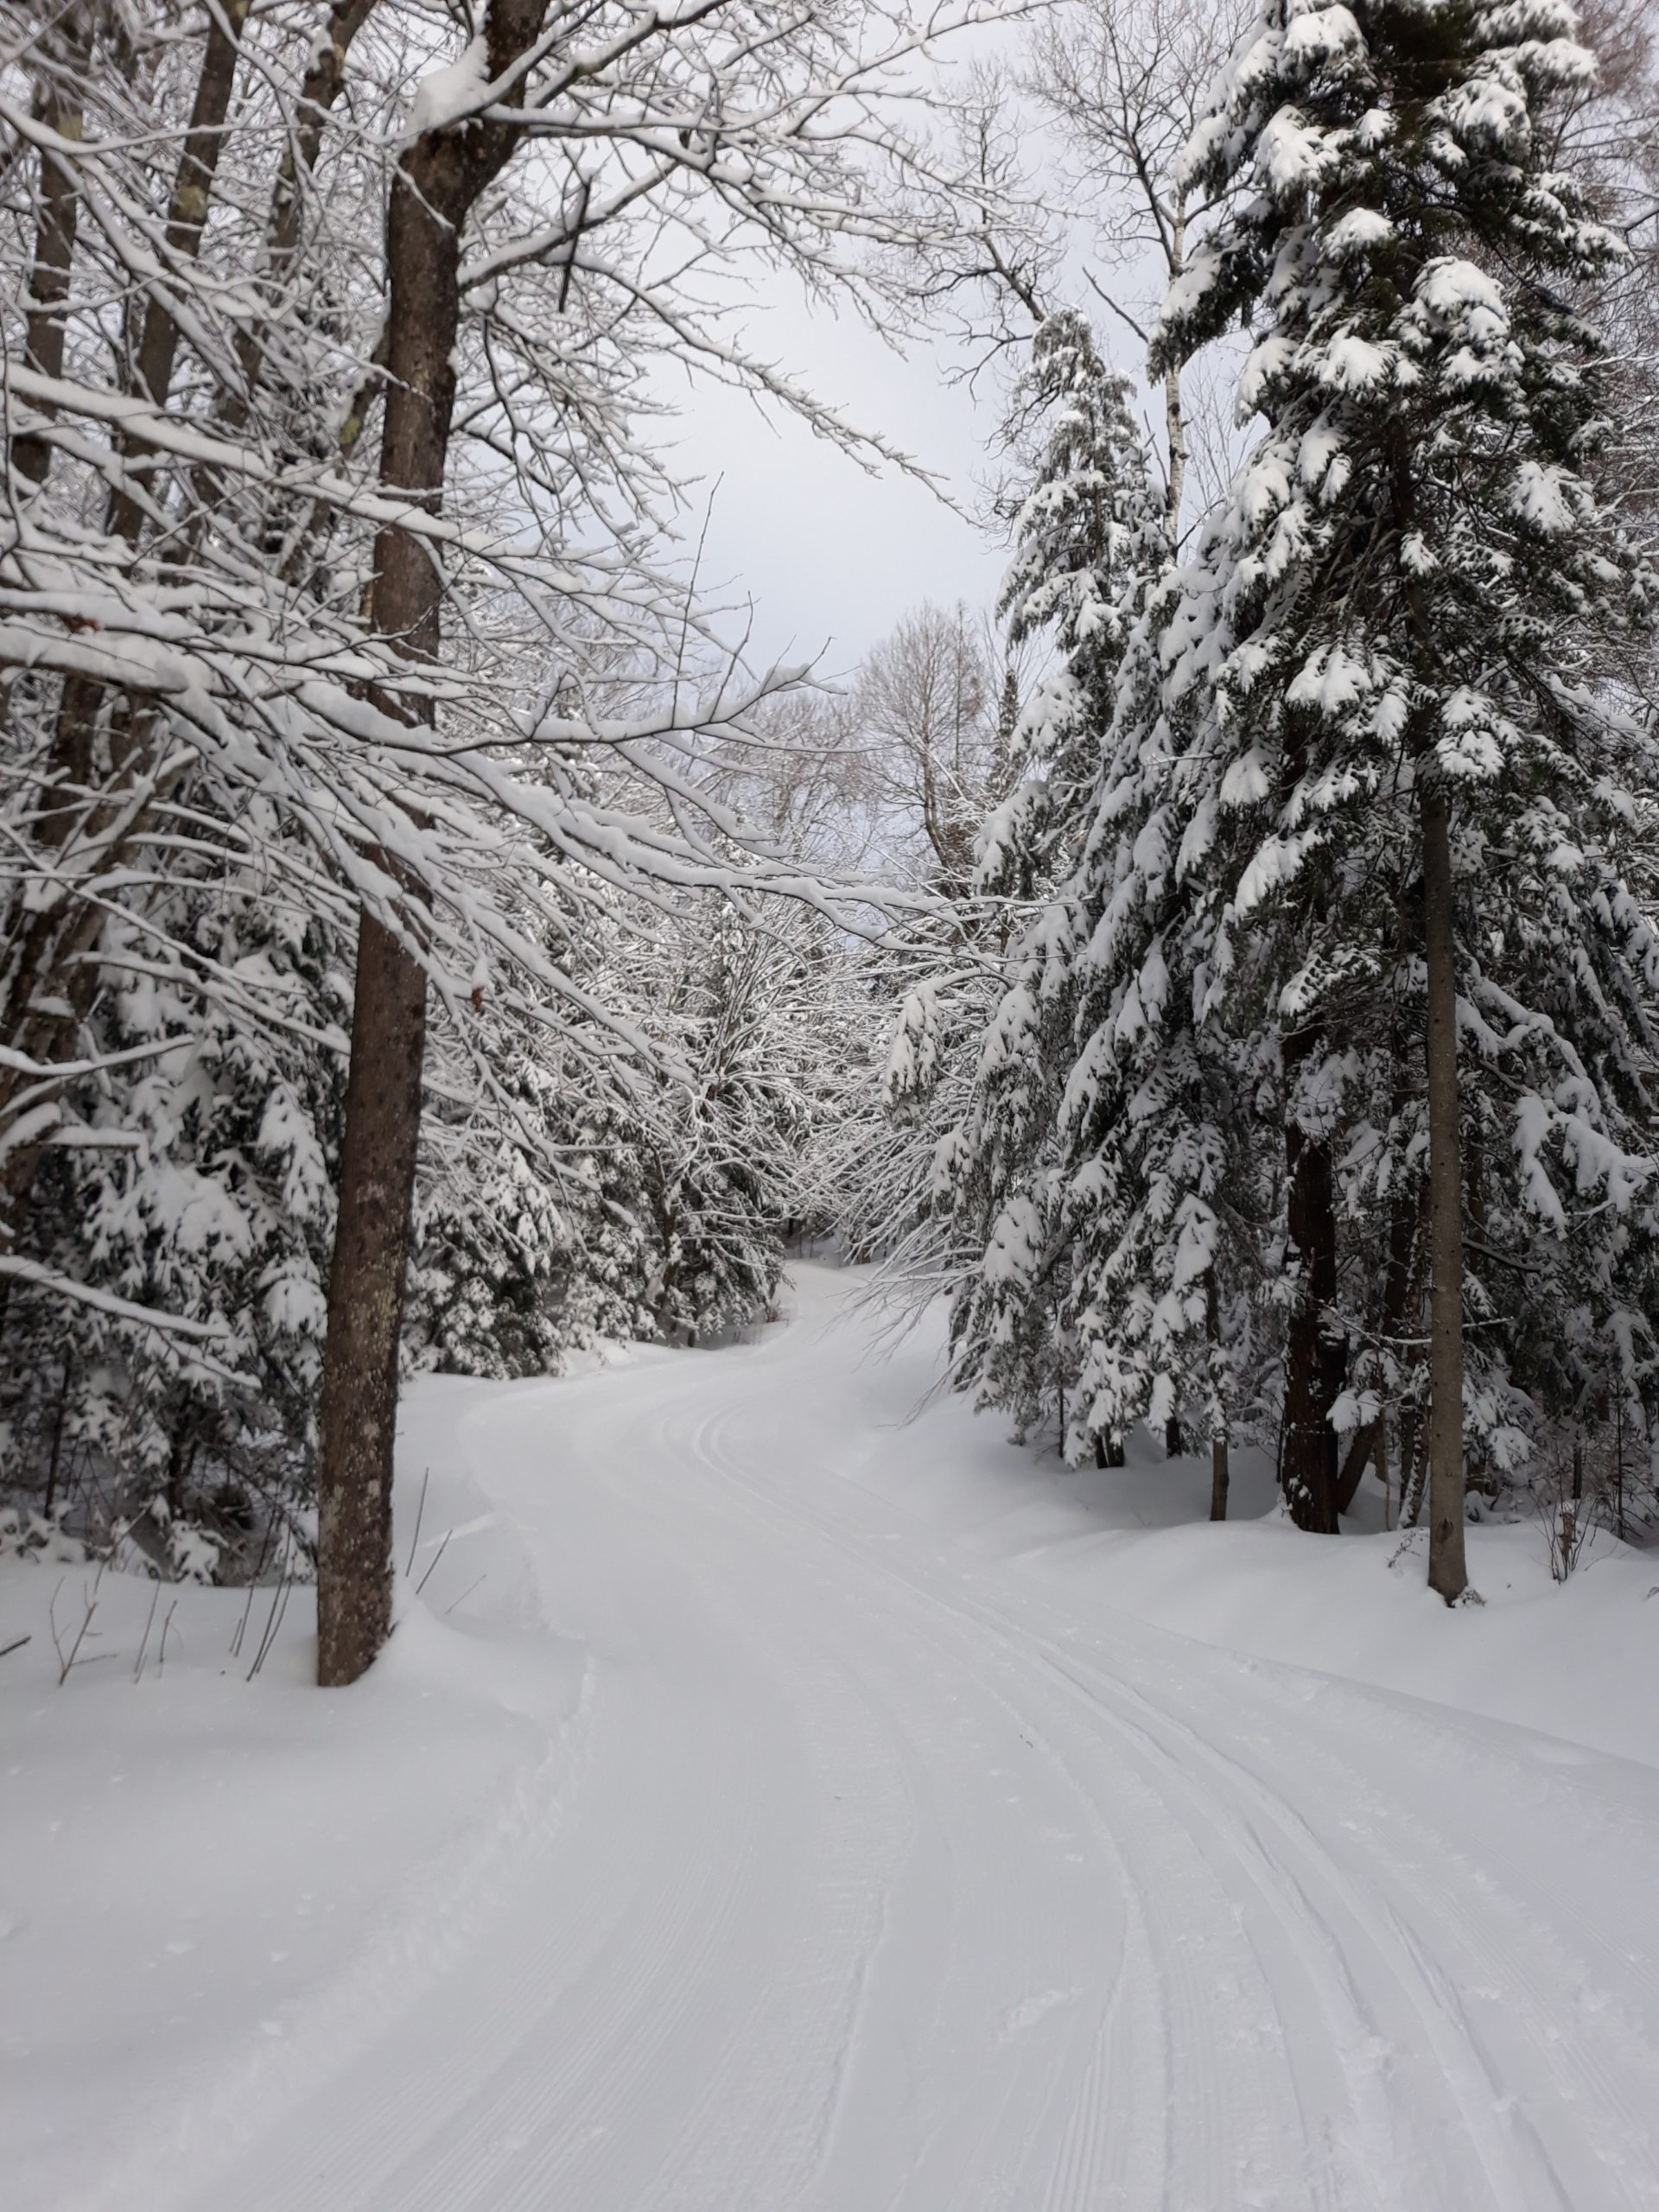 Winter Trails in Perfect Condition!